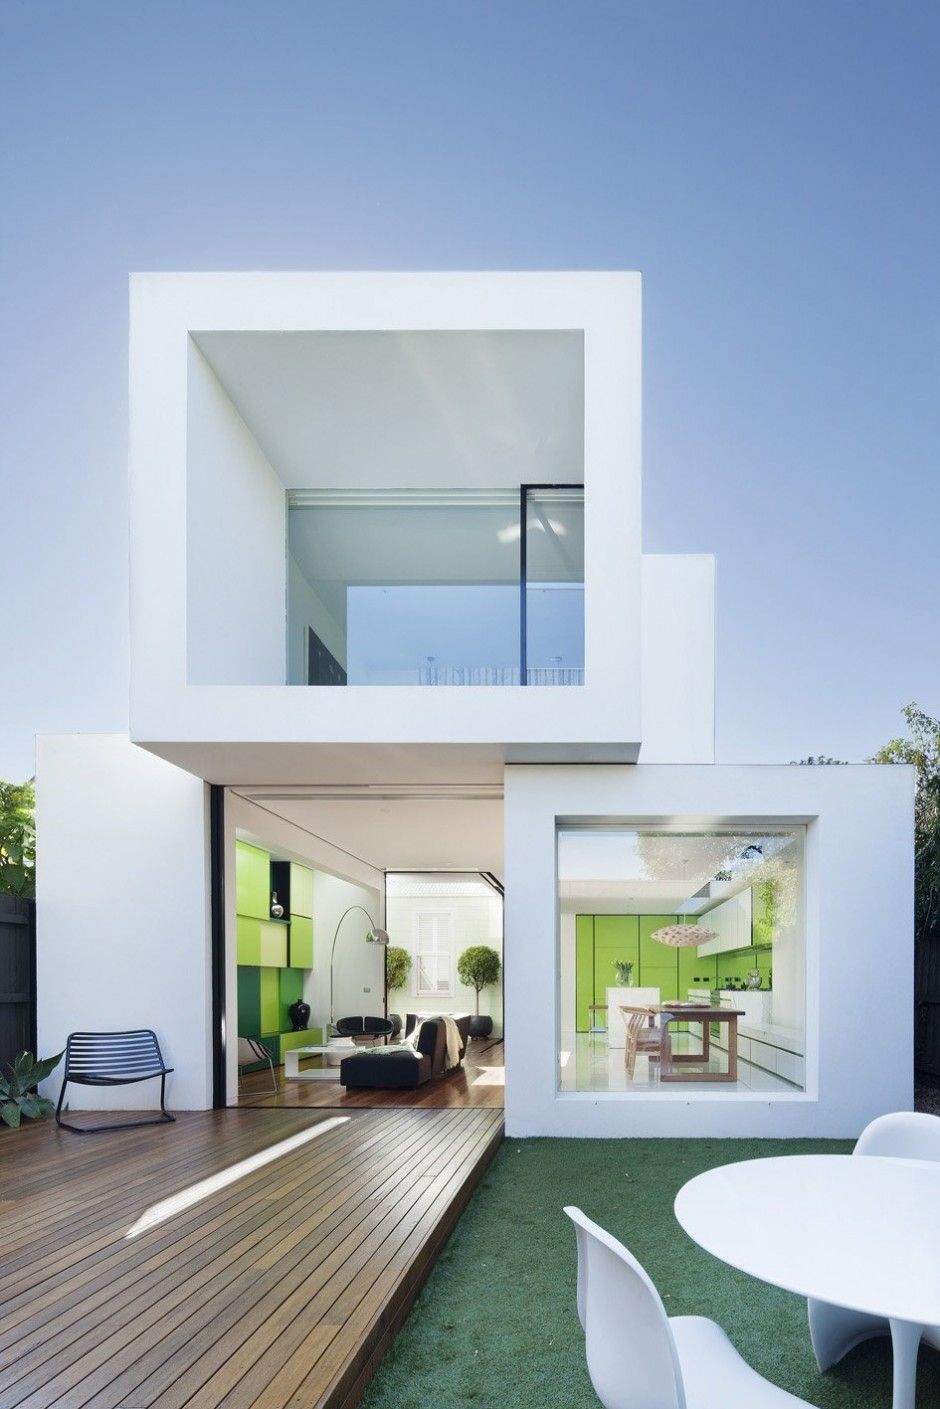 Shakin Stevens House is a minimalist house located in Melbourne, Australia, designed by Matt…